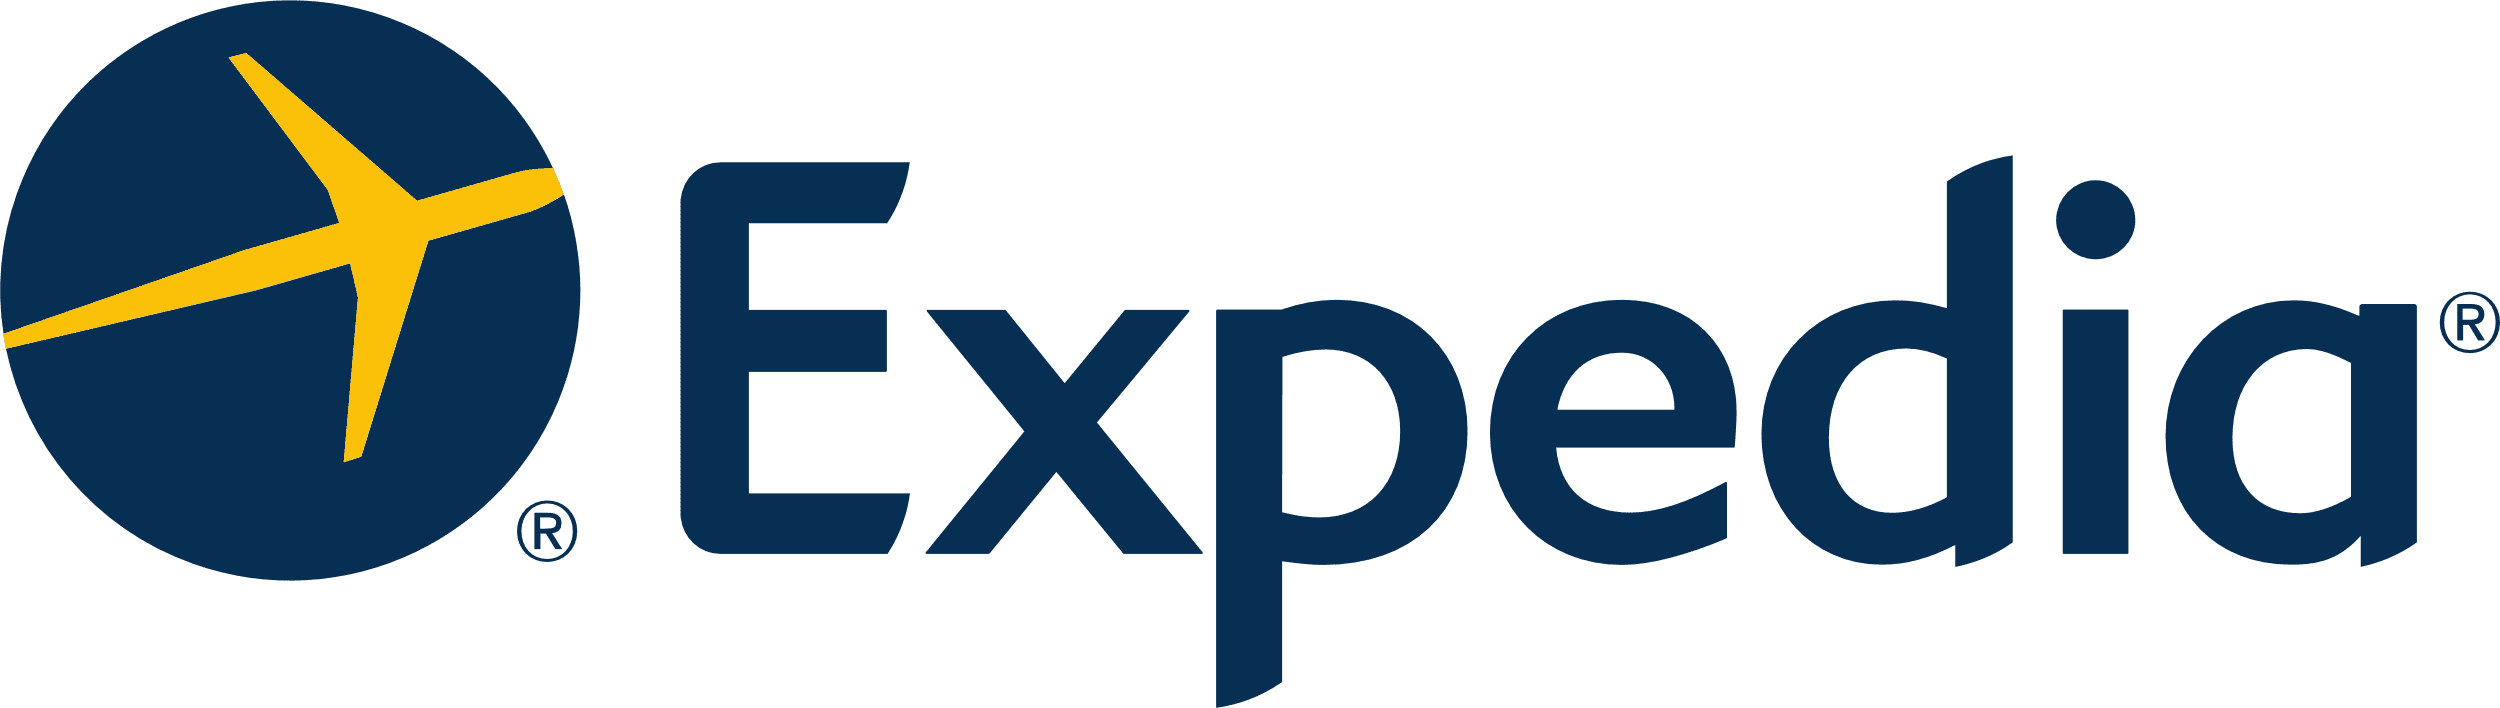 https://roseland.co.za/wp-content/uploads/2018/09/Expedia-logo.png